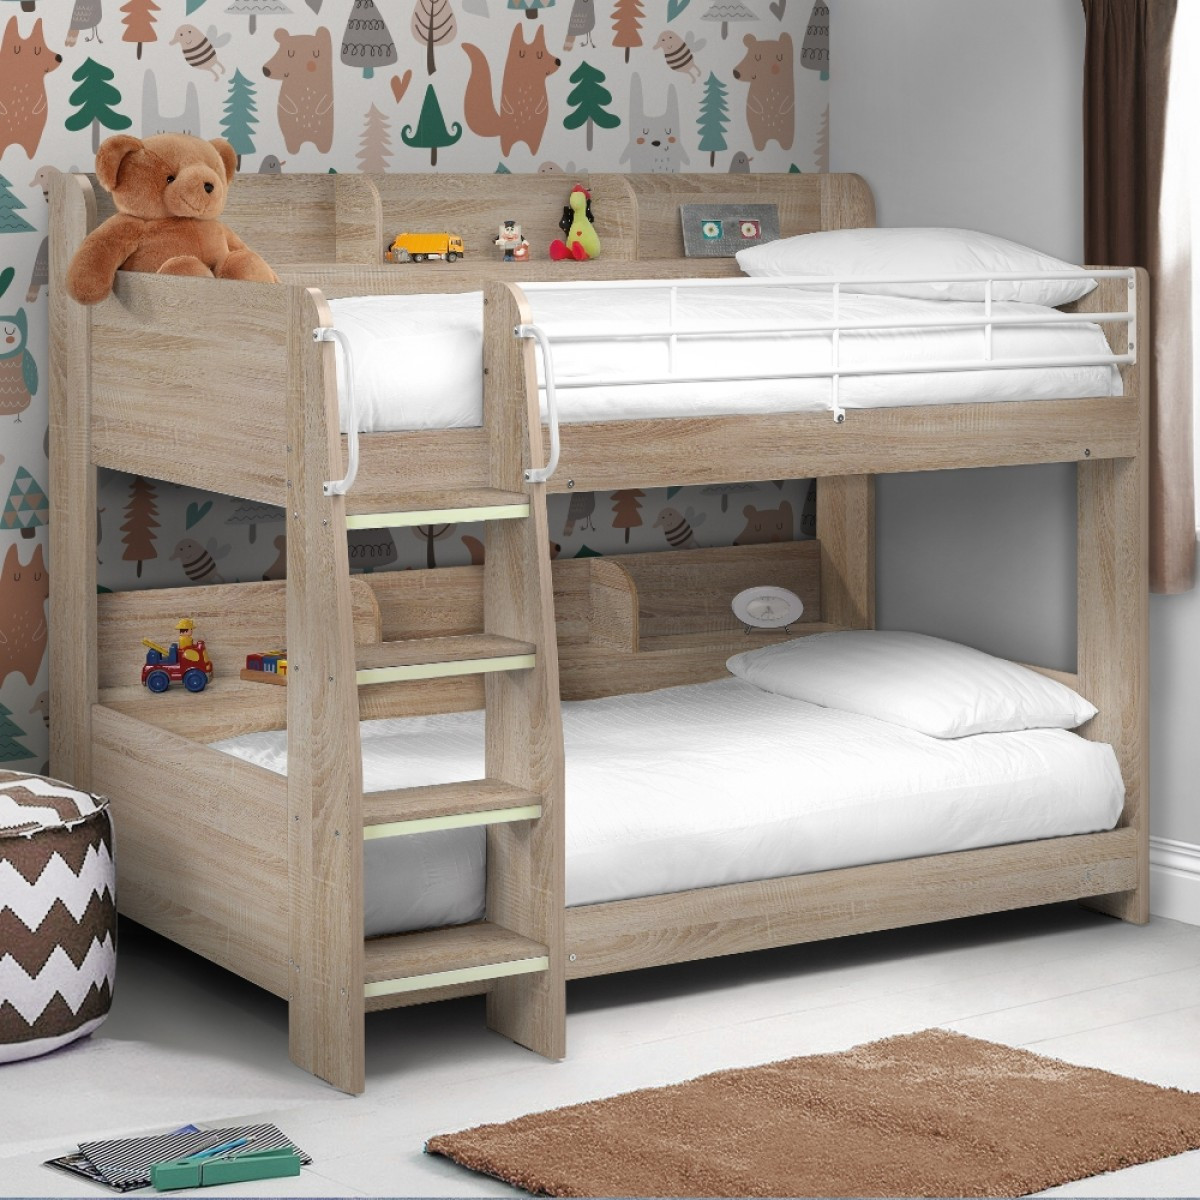 Kids Loft Bed With Storage
 Domino Oak Wooden and Metal Kids Storage Bunk Bed